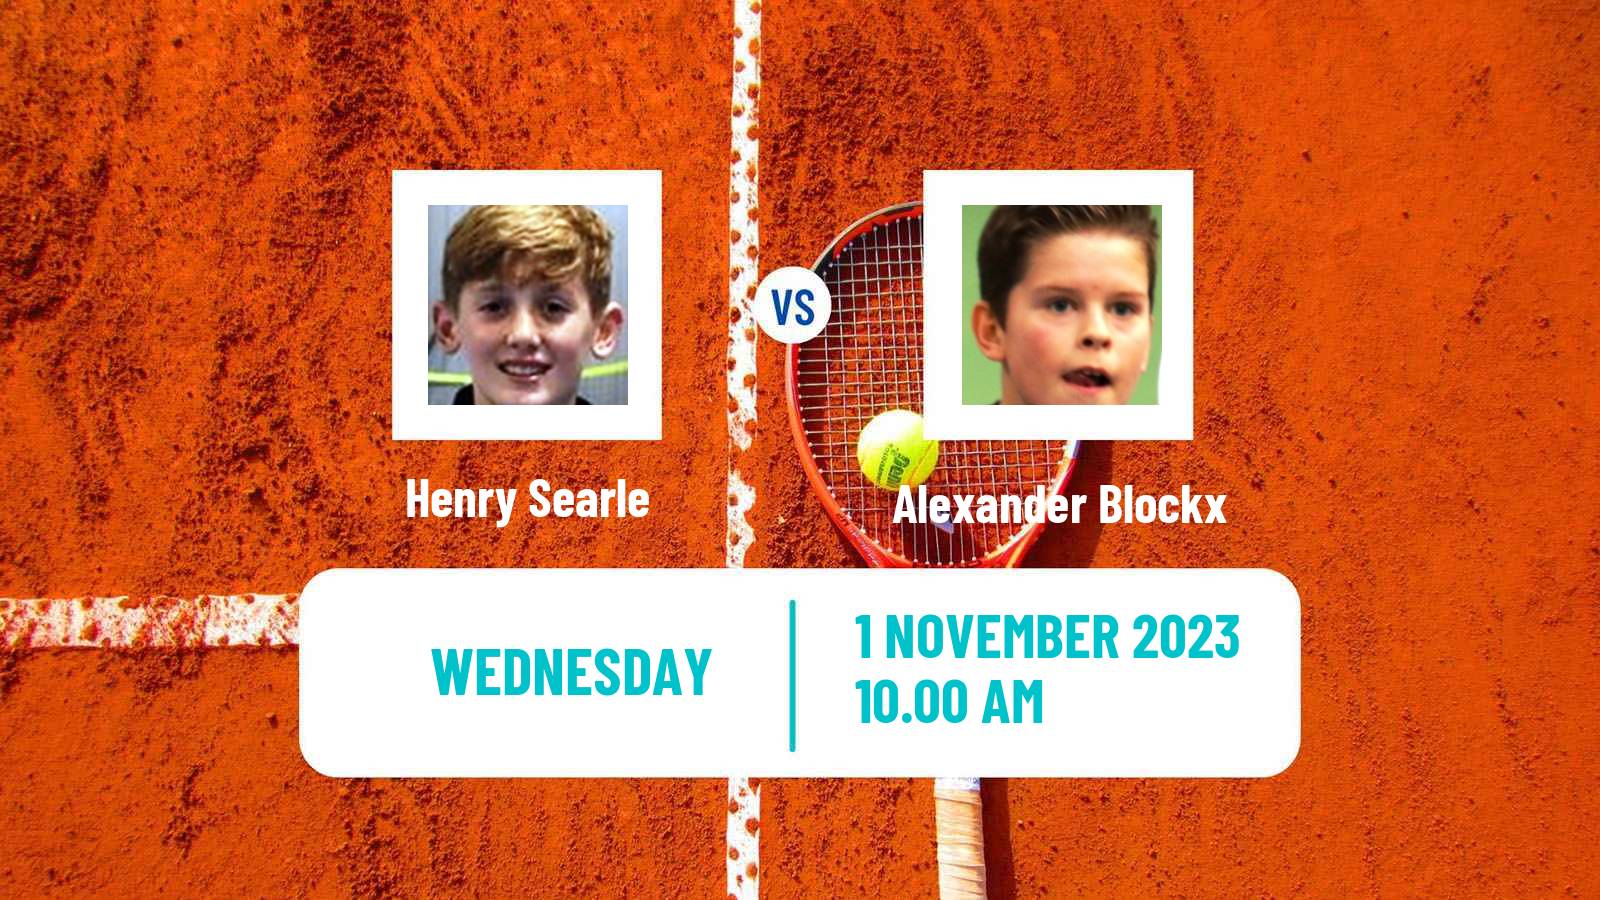 Tennis ITF M25 Sunderland 2 Men Henry Searle - Alexander Blockx